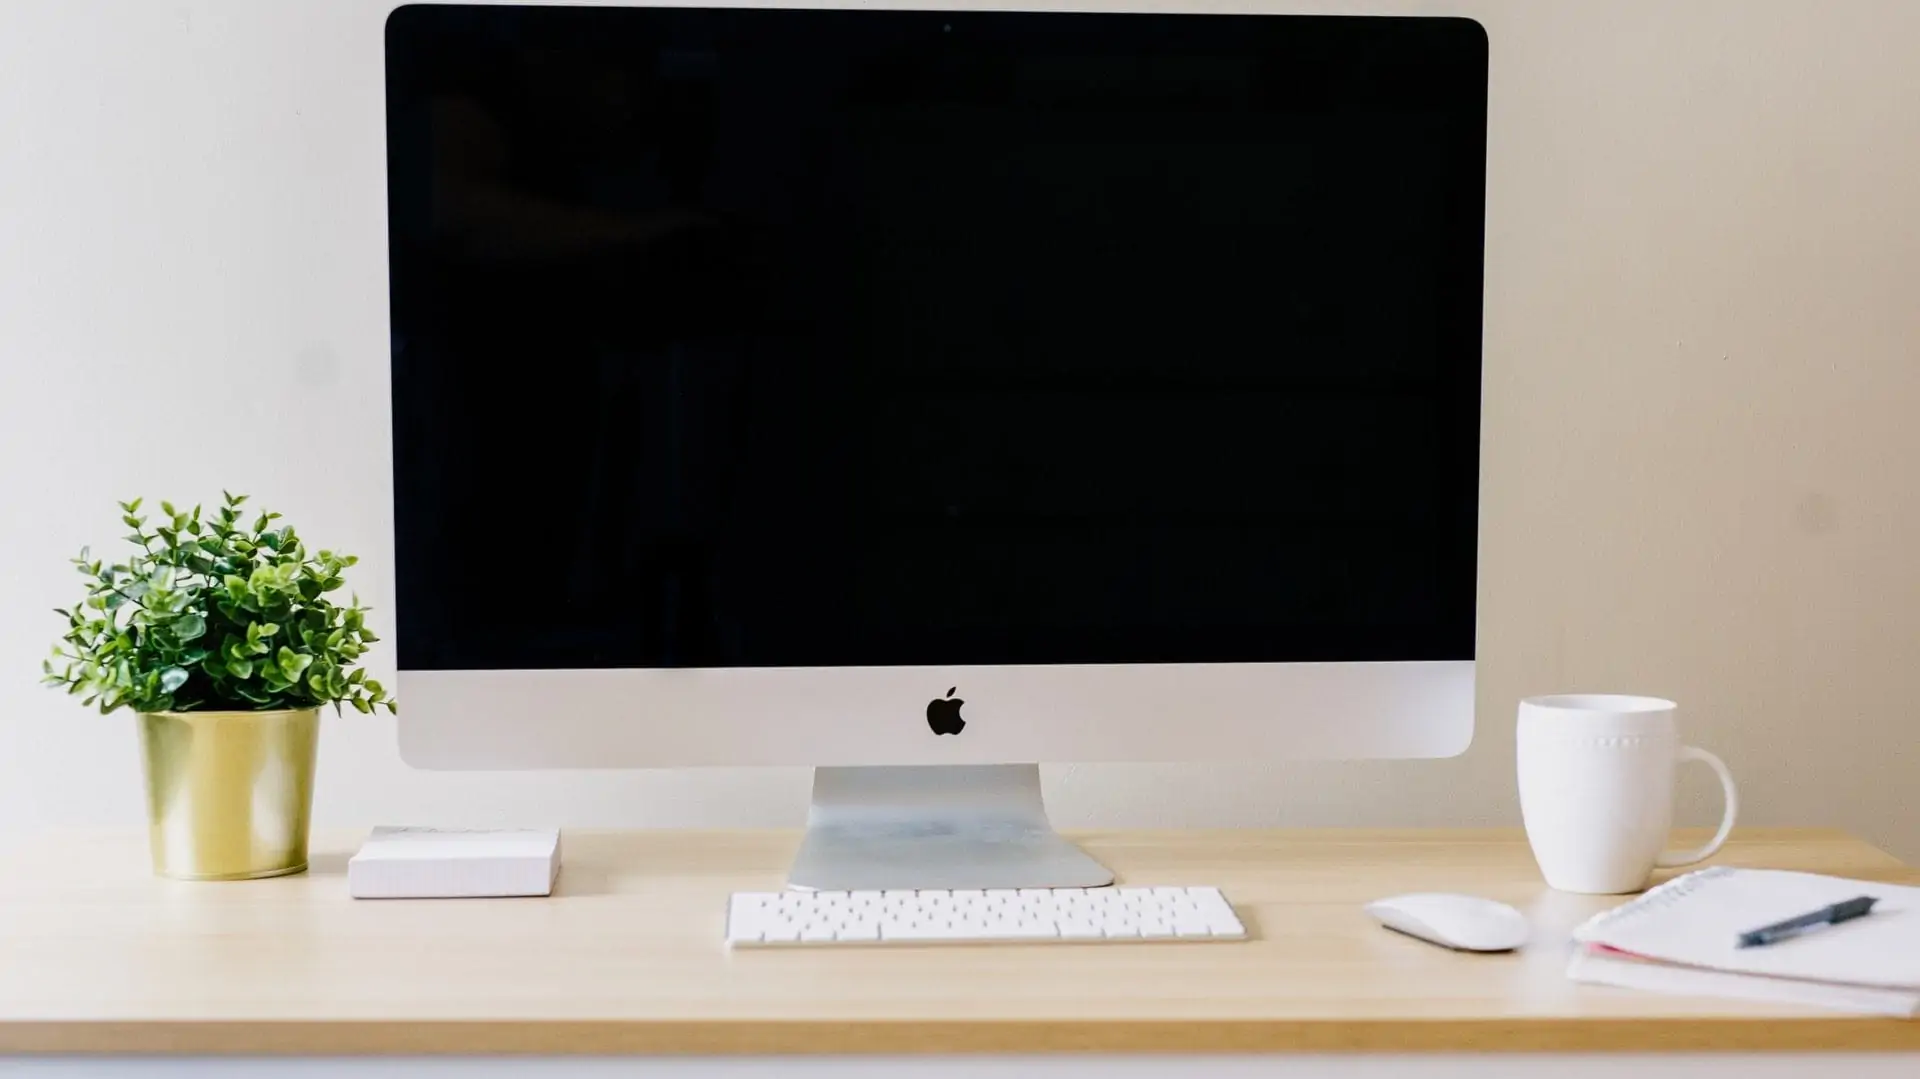 Apple monitor met toetsenbord, plantje, muis, pen en mok. Vooraanzicht.